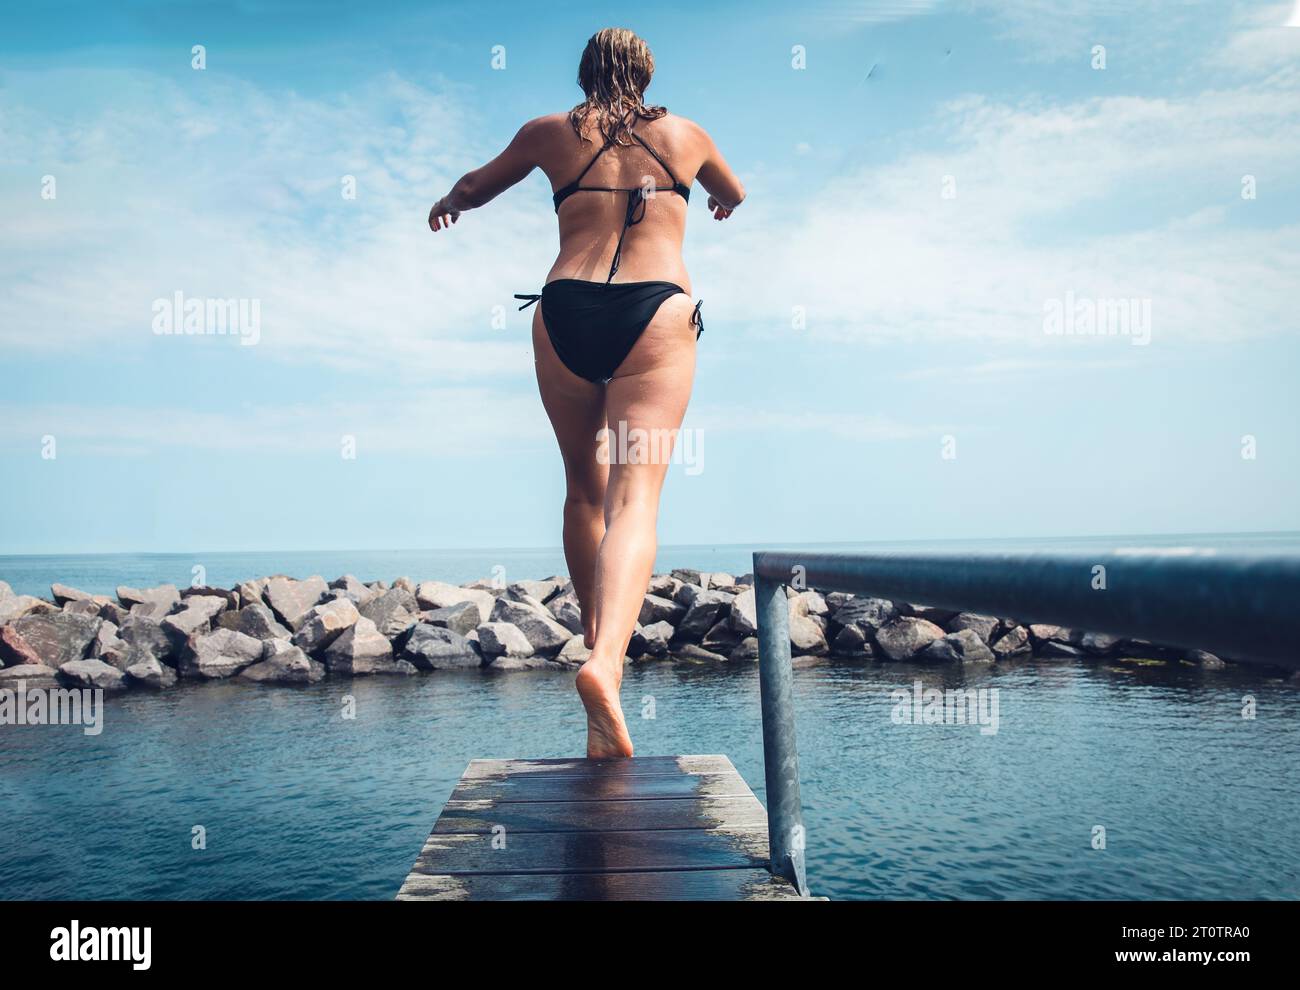 Woman Walking A Diving Board Into The Ocean In Scandinavia Stock Photo